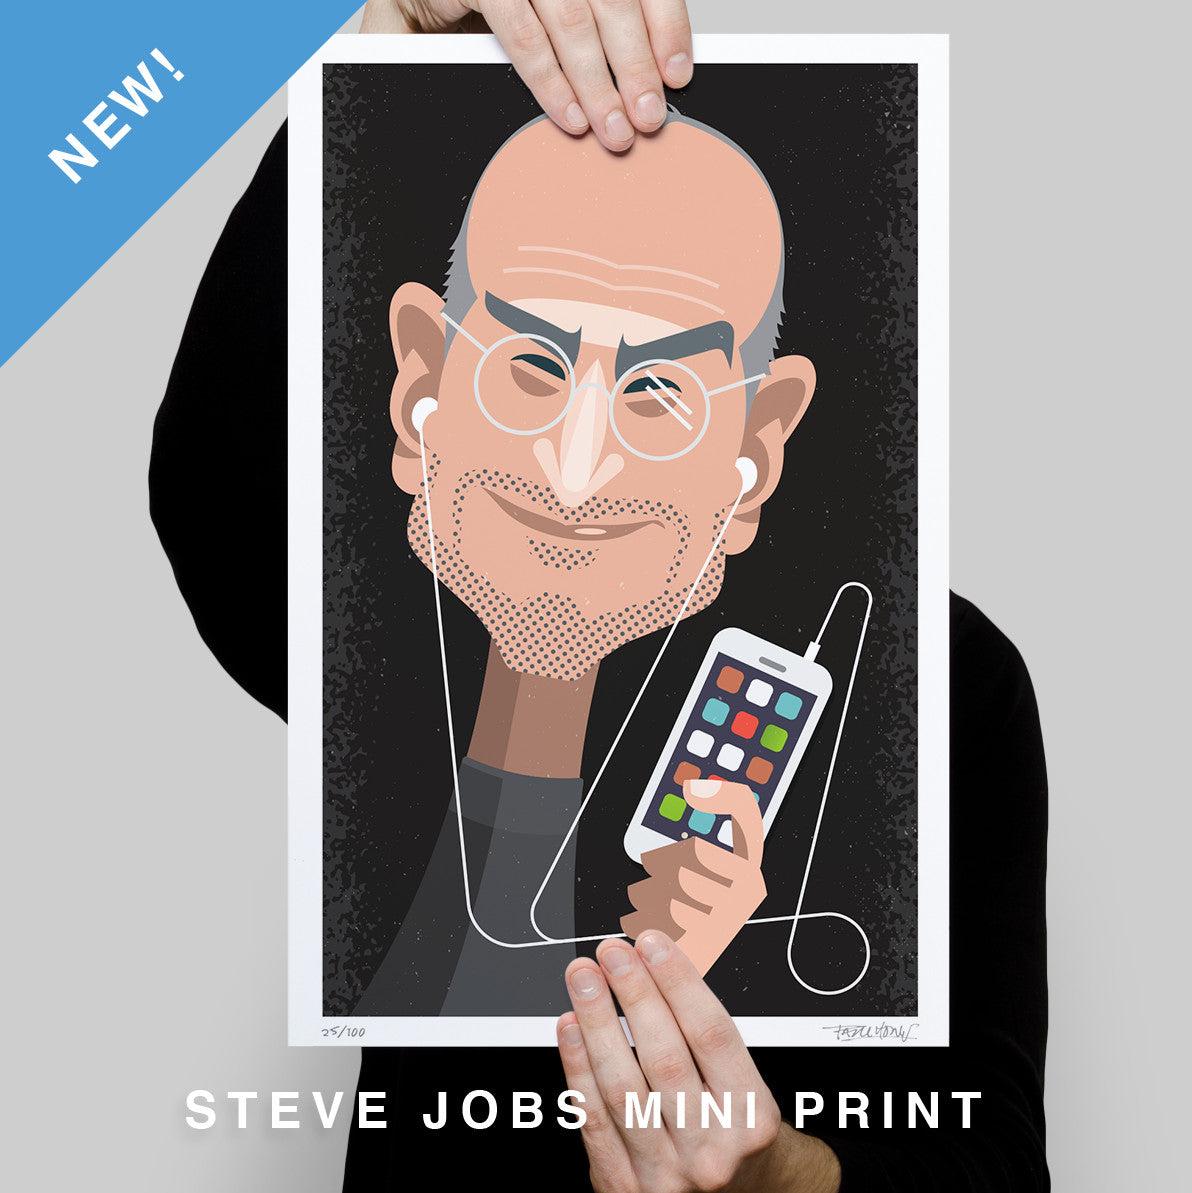 Steve Jobs Mini Print